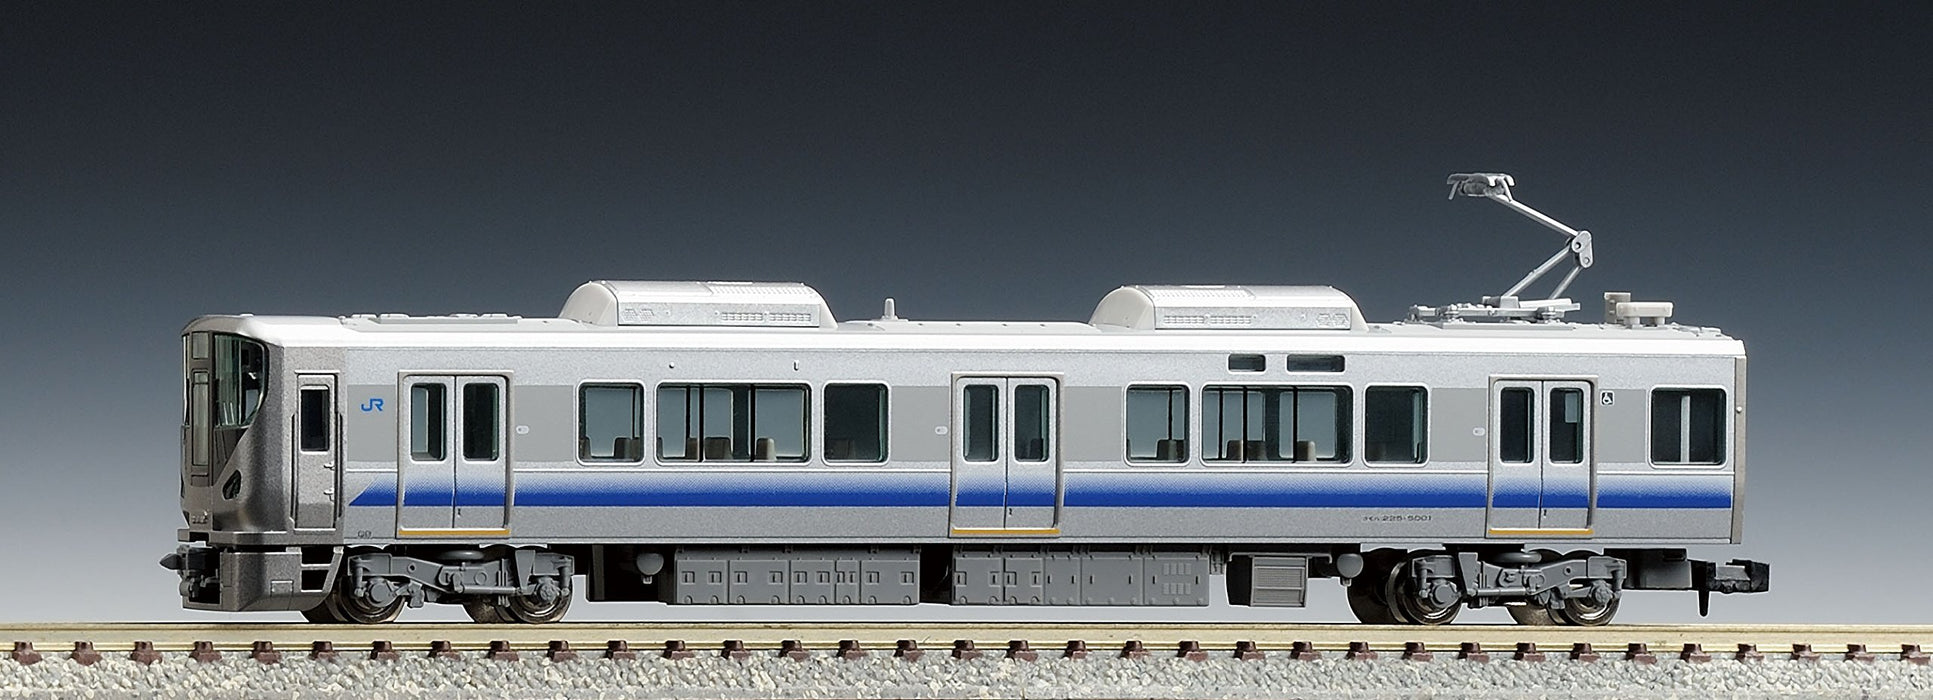 Tomytec Tomix N Gauge 225 5000 Series Extension Set - Model Railway Train 92439